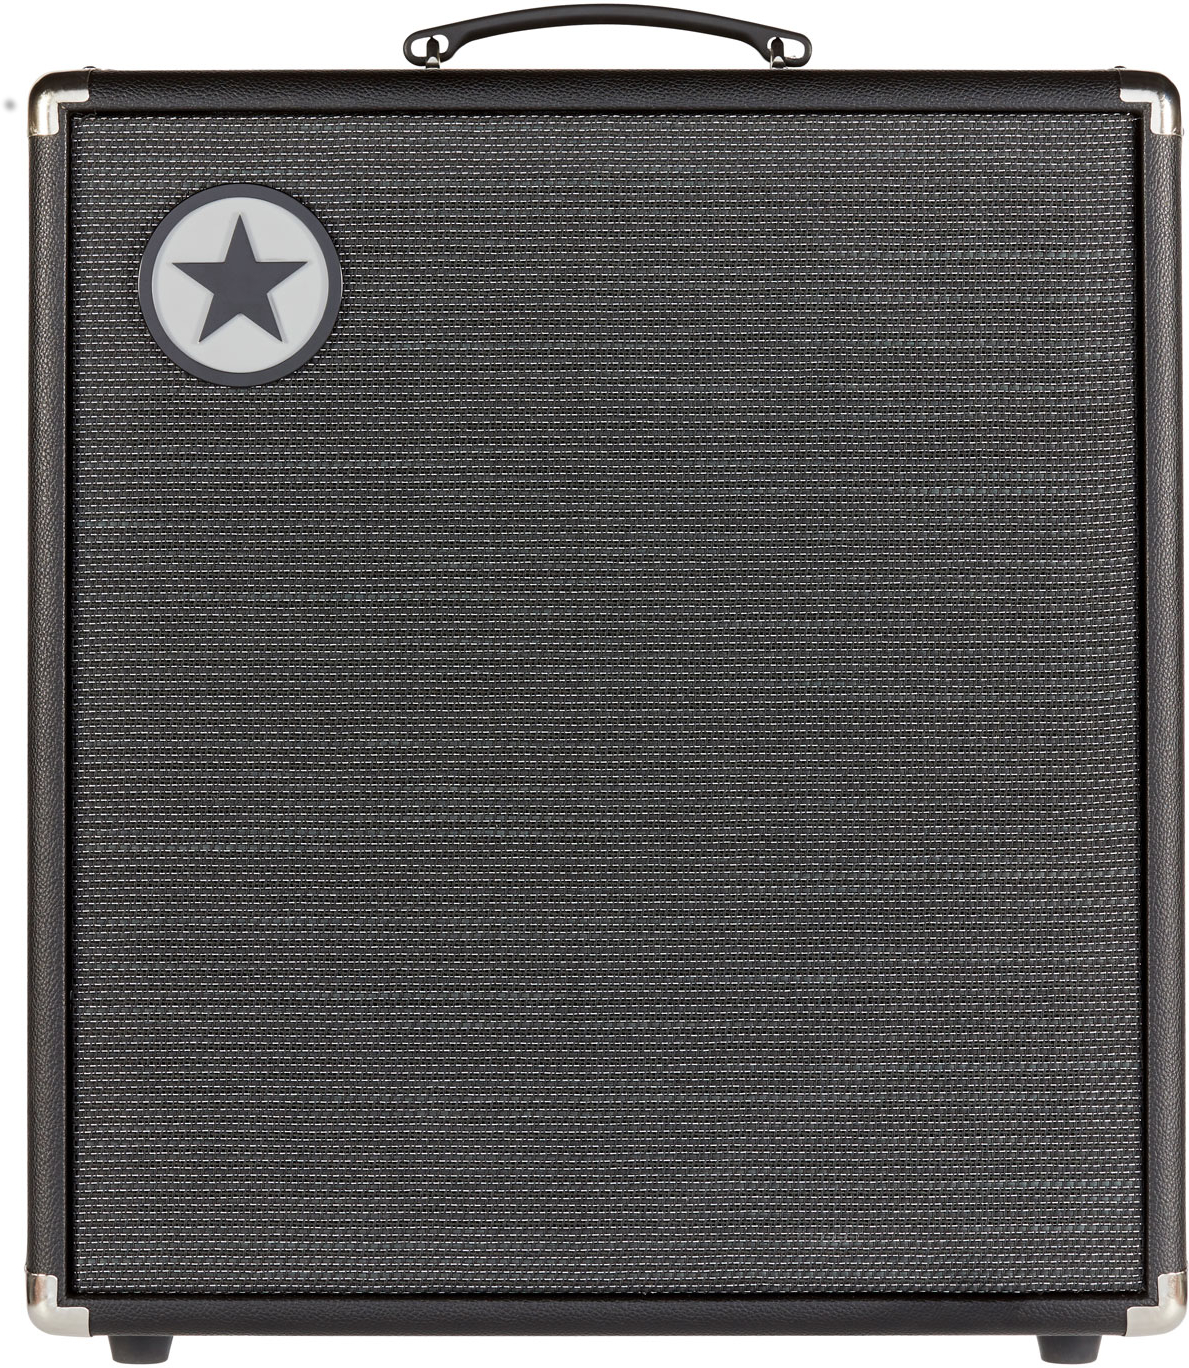 Blackstar Unity 250 - Bass combo amp - Variation 3